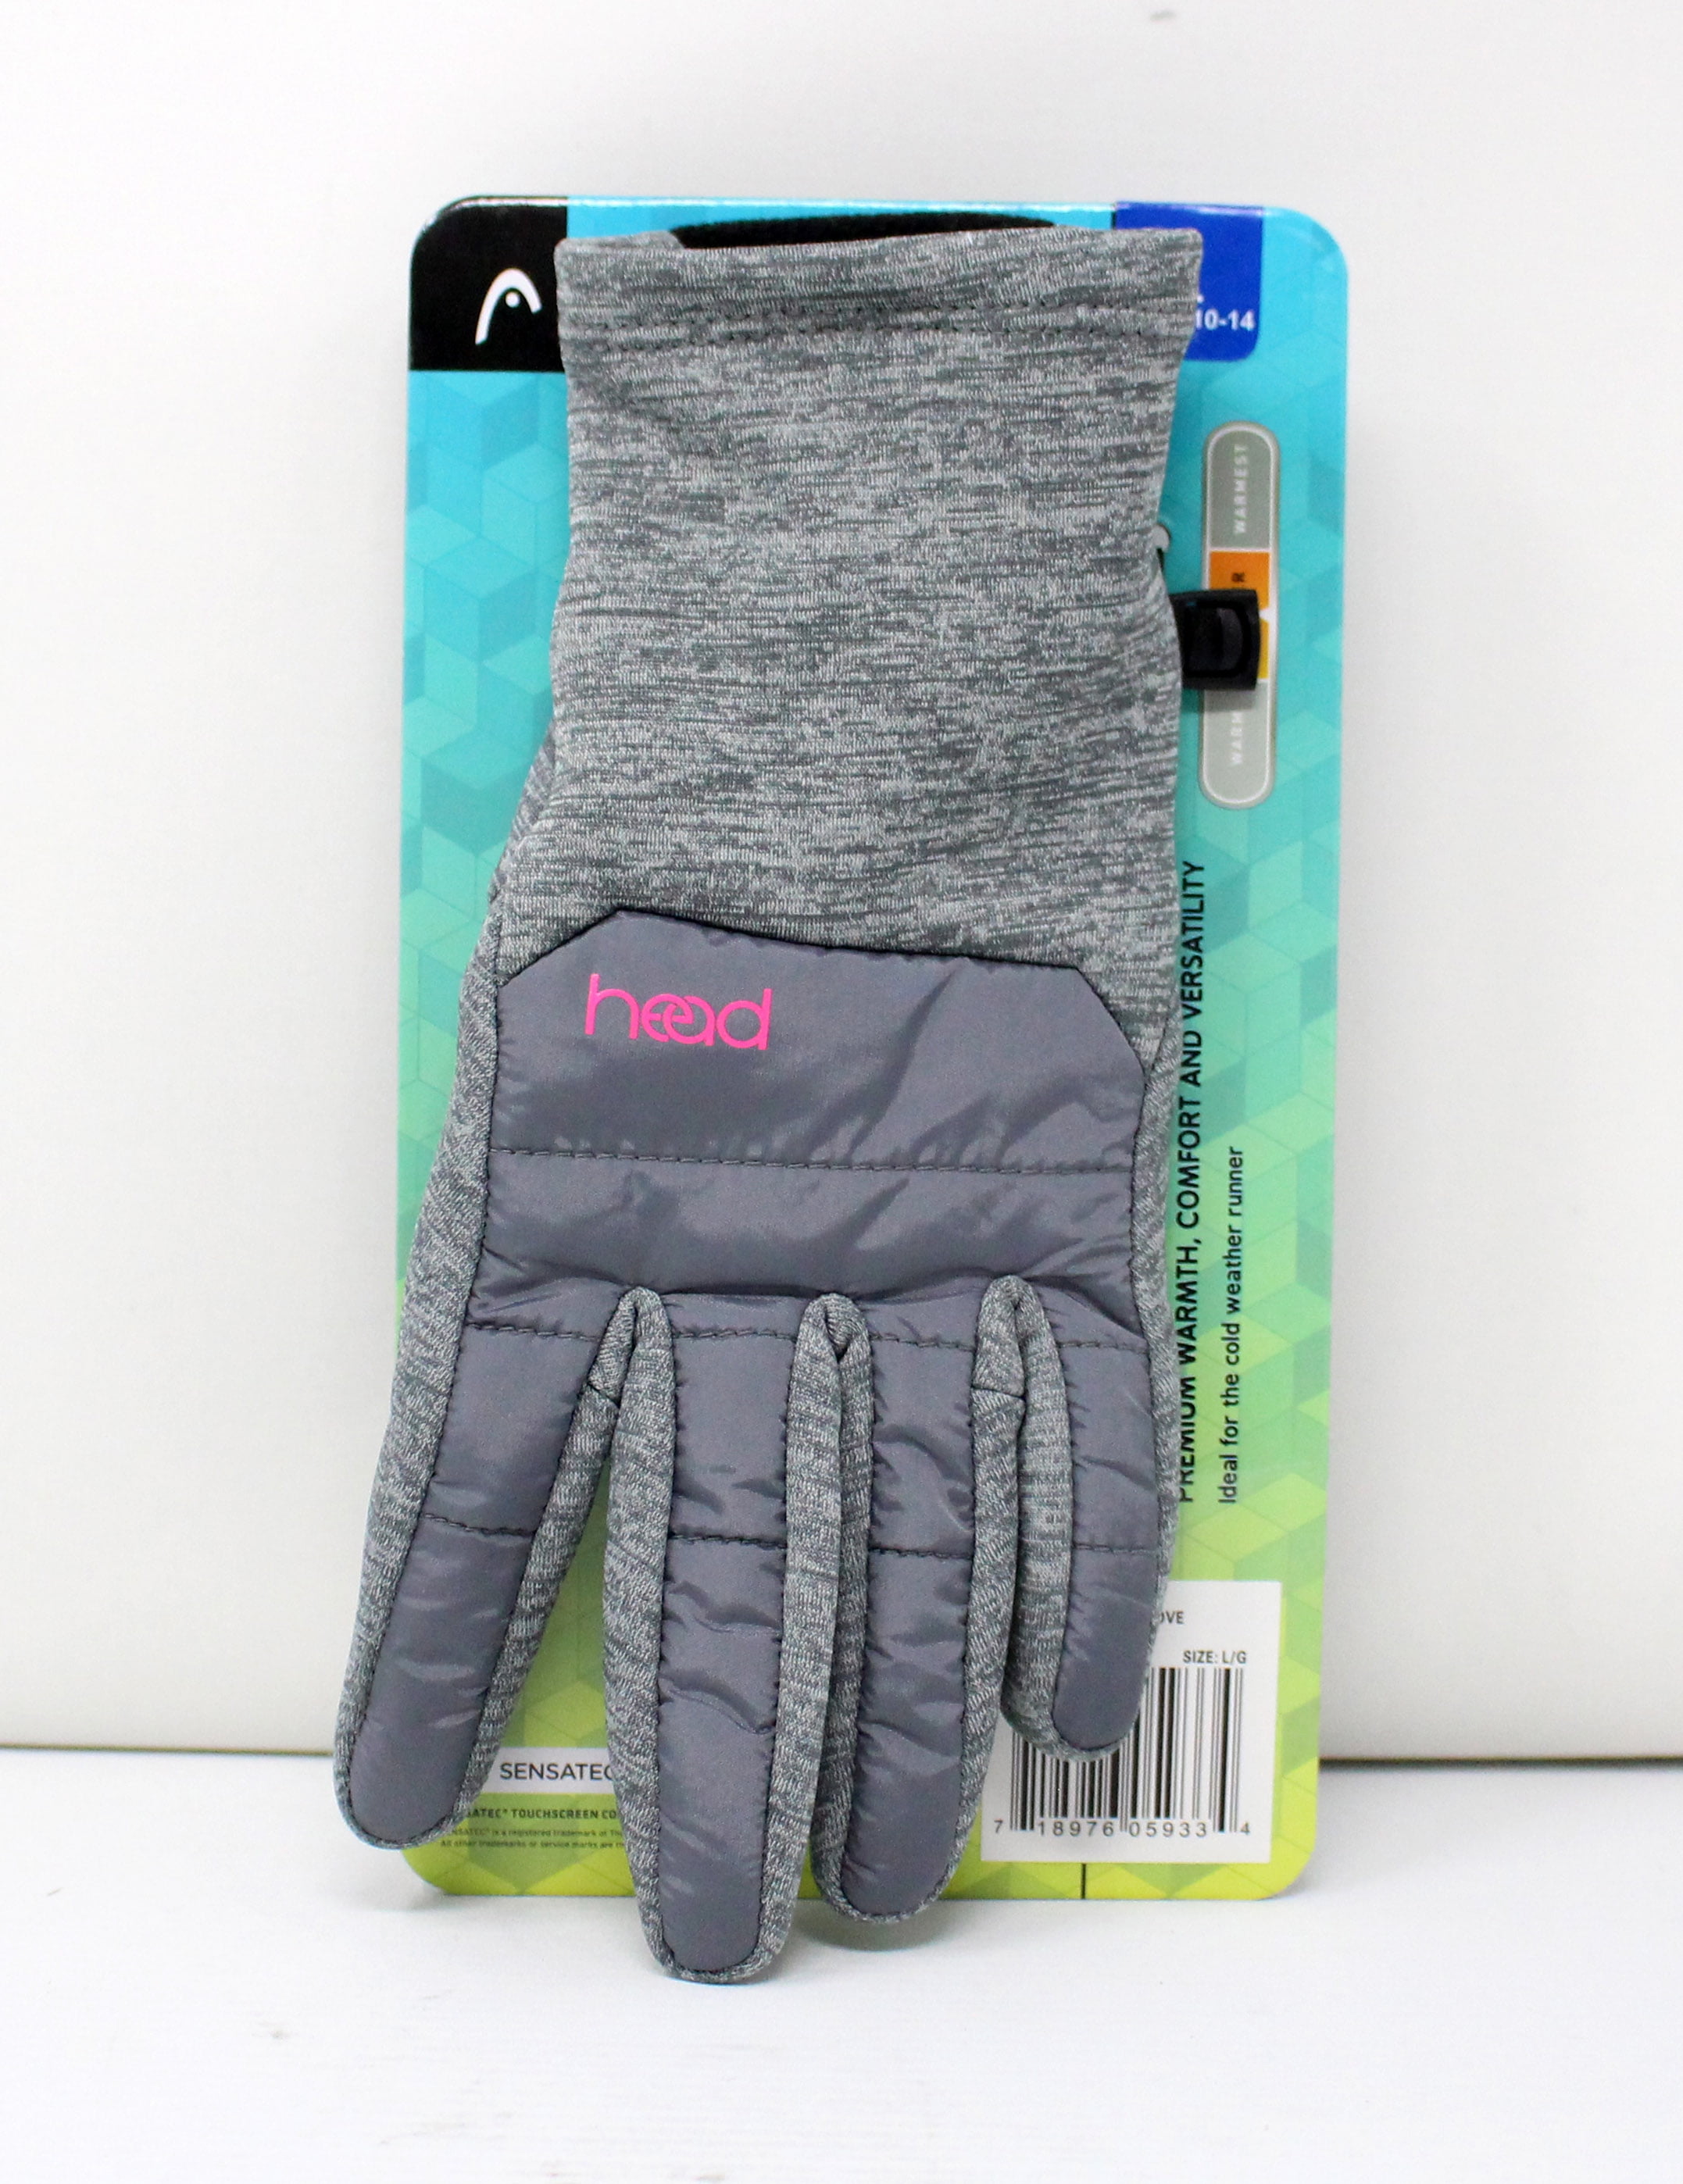 Head Premium Warmth Junior Hybrid Gloves Sensatec Touchscreen Black 